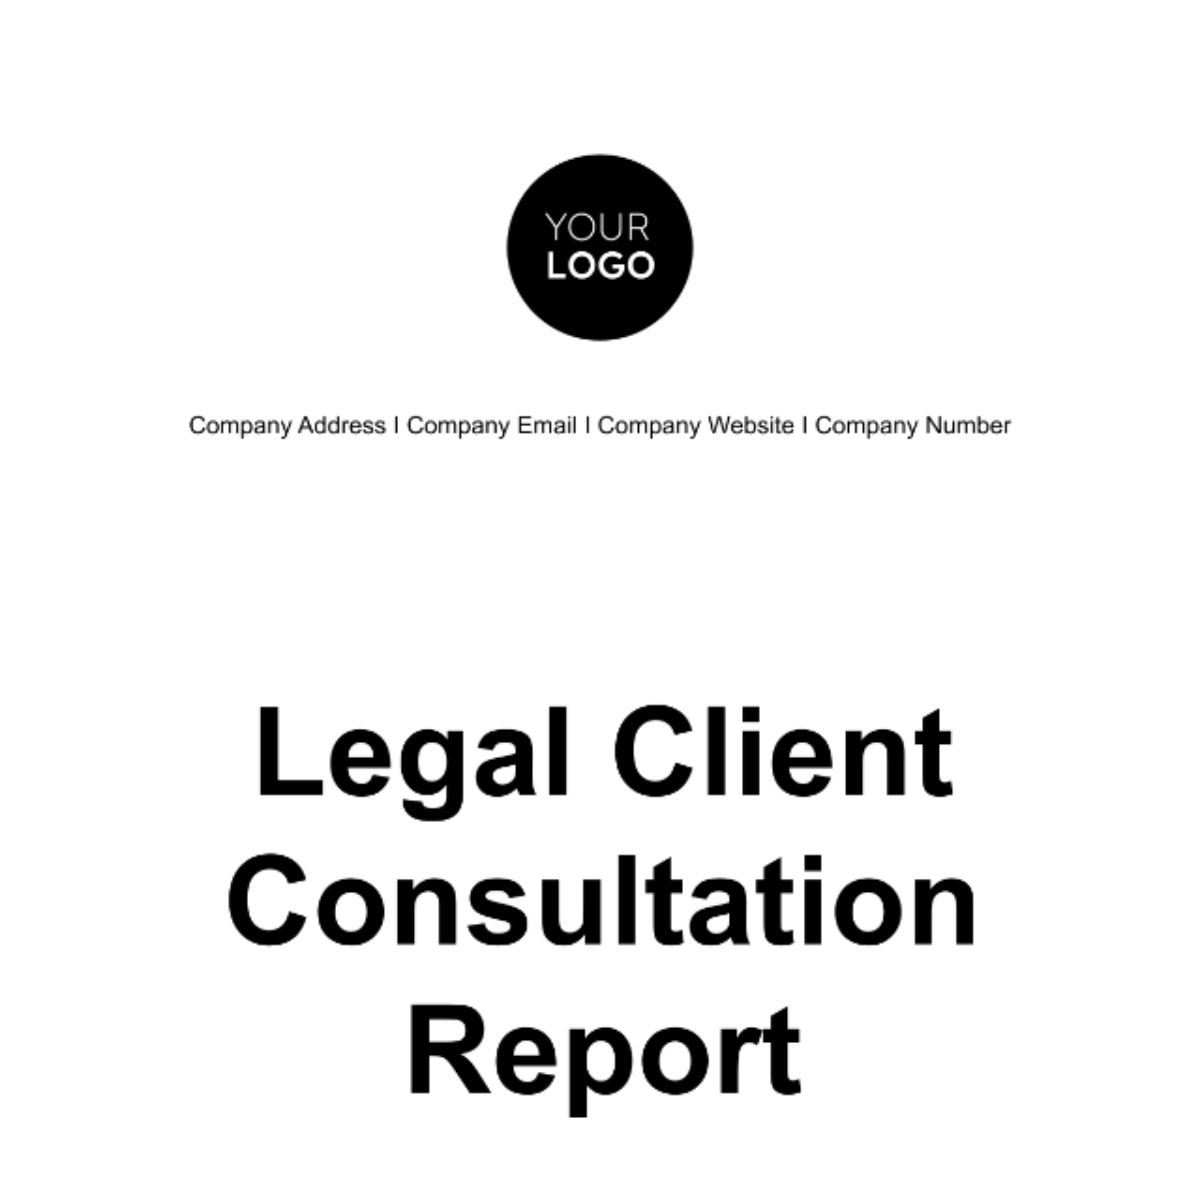 Legal Client Consultation Report Template